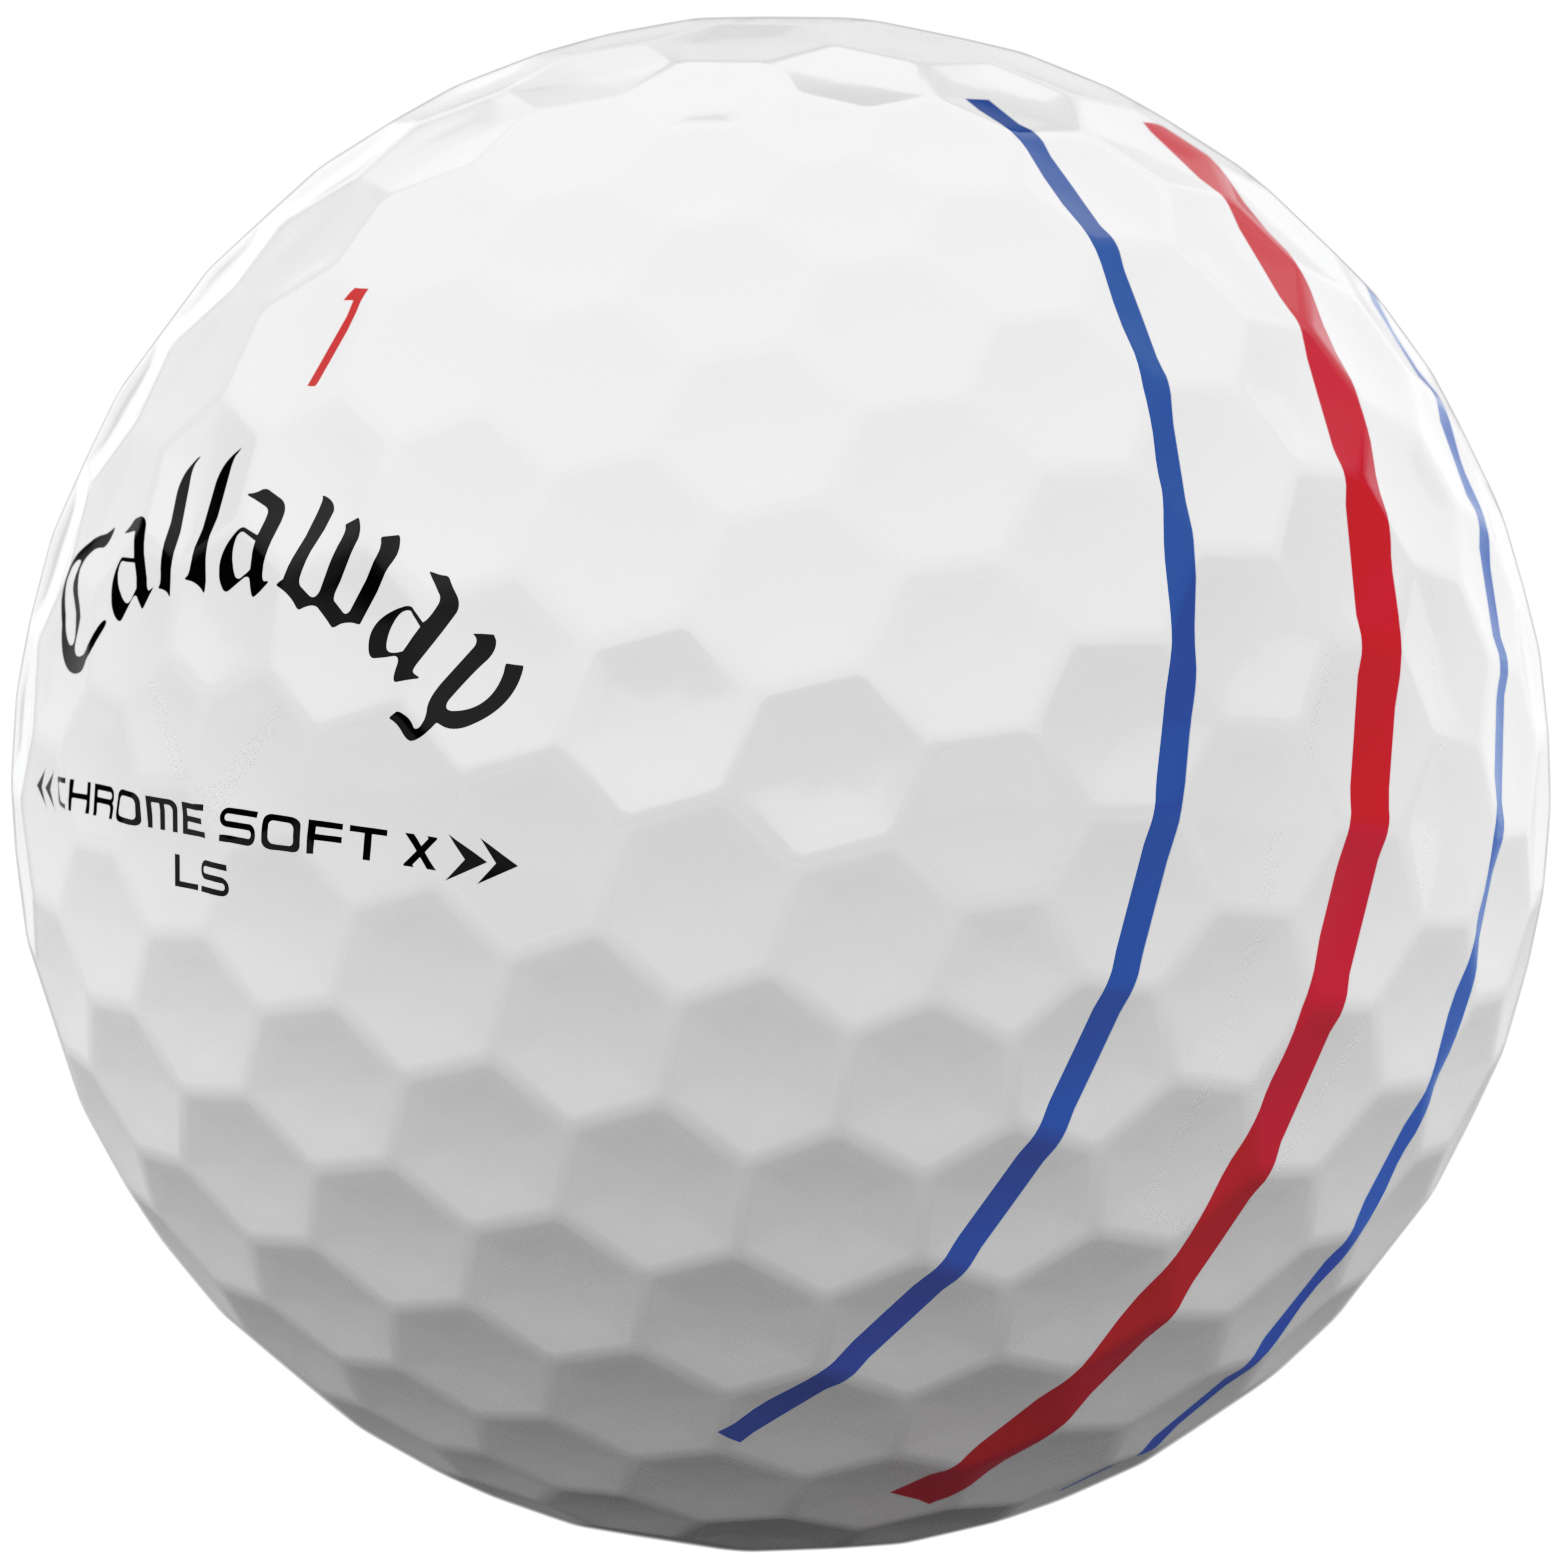 Callaway Chrome Soft X LS Triple Track Golfbälle, white